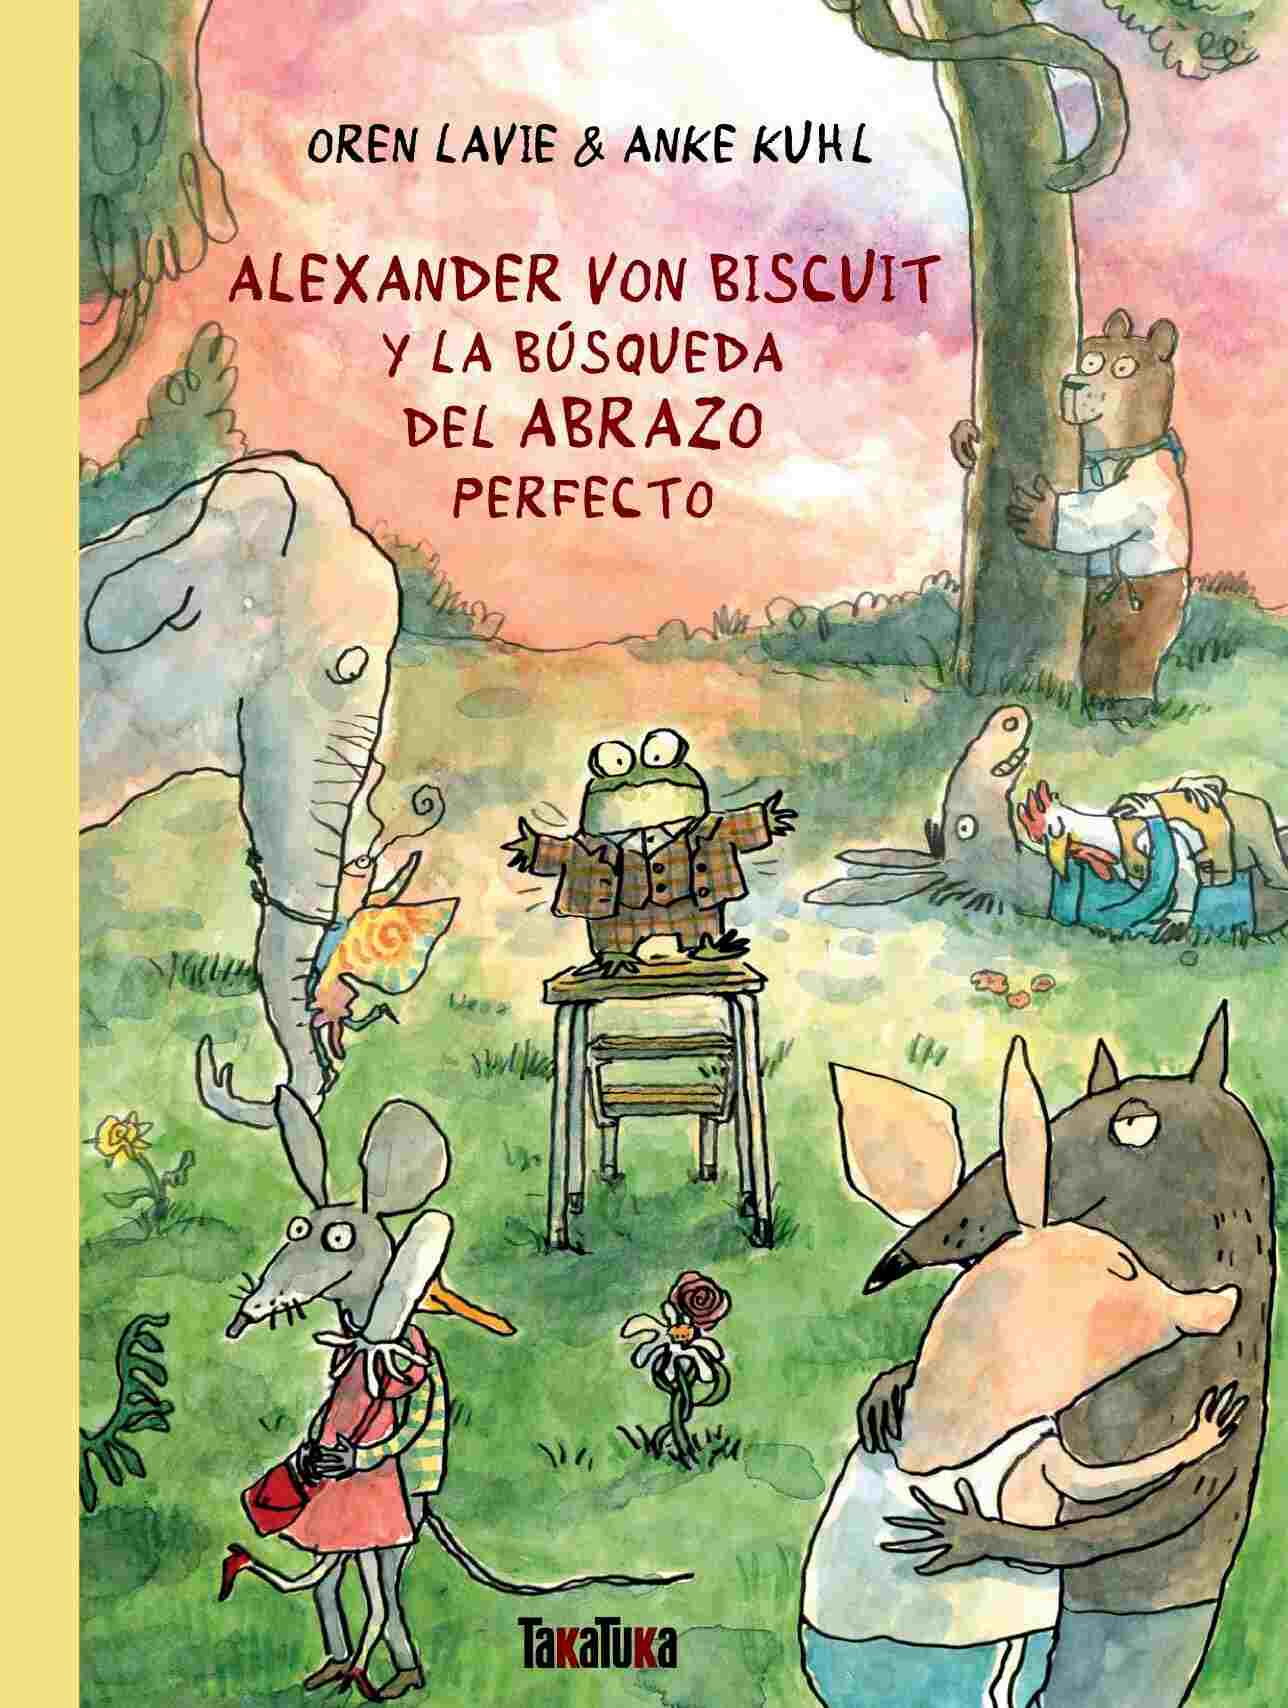 Alexander von Biscuit y la búsqueda del abrazo perfecto - Oren Lavie | Anke Kuhl